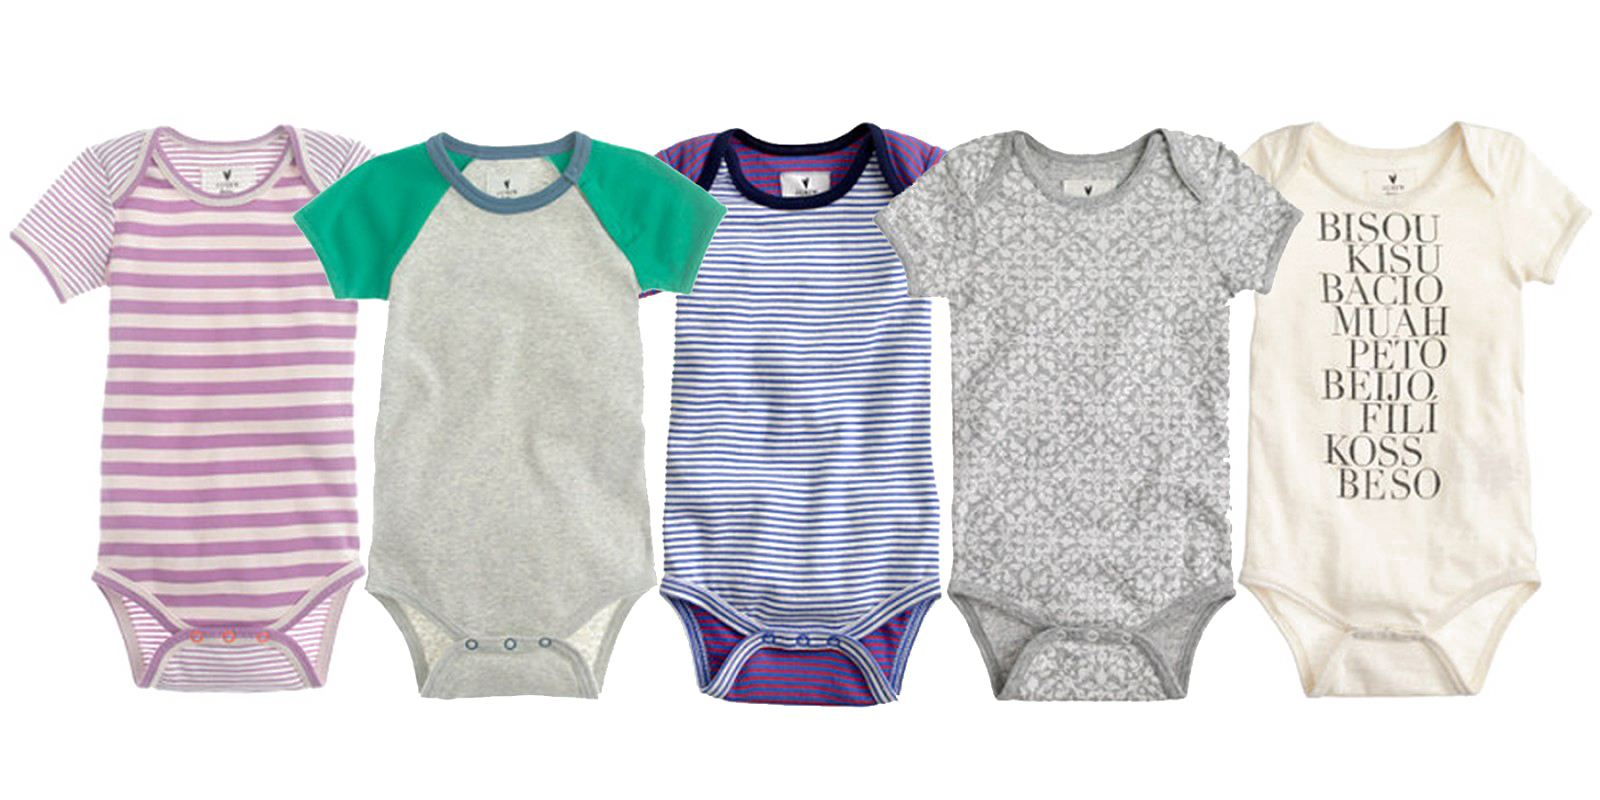 Baby Clothes Bodysuit PNG Transparent Image